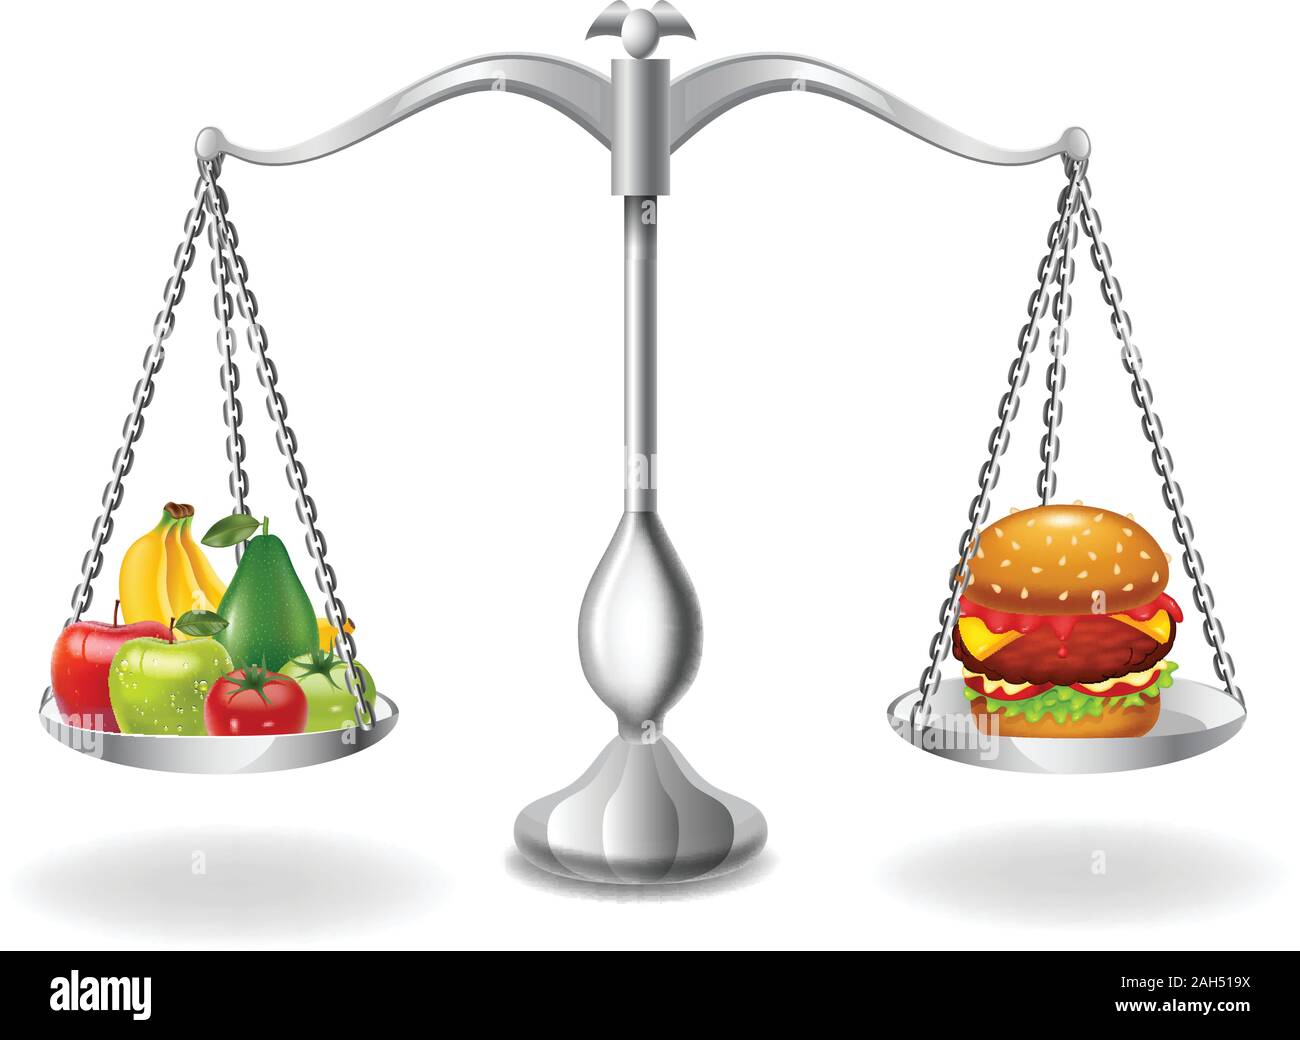 https://c8.alamy.com/comp/2AH519X/cartoon-fruits-and-hamburger-balance-on-the-scale-2AH519X.jpg